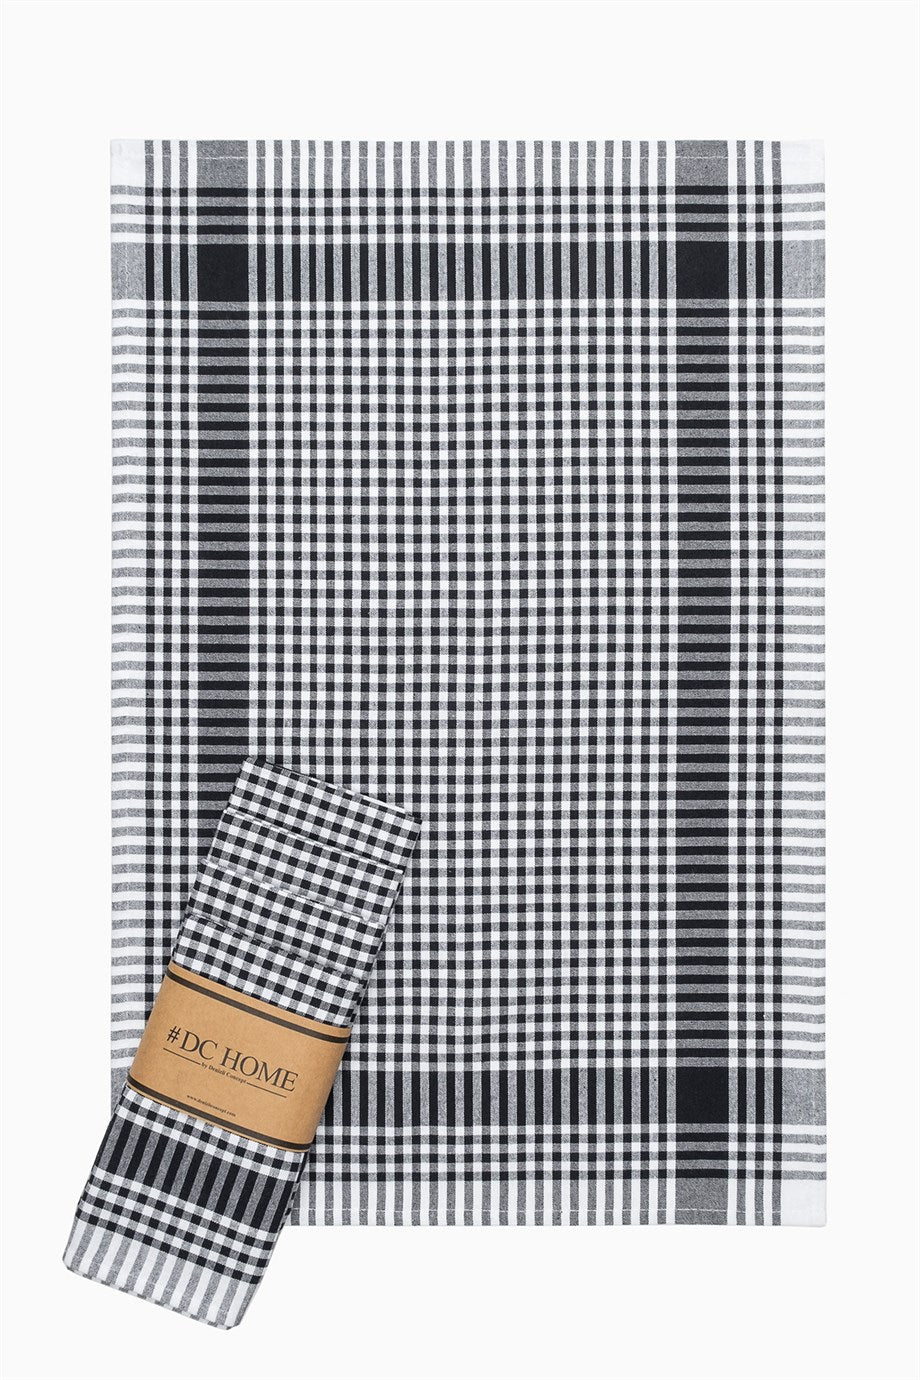 DENIZLI CONCEPT Pöti Checkered Tea Towel Black